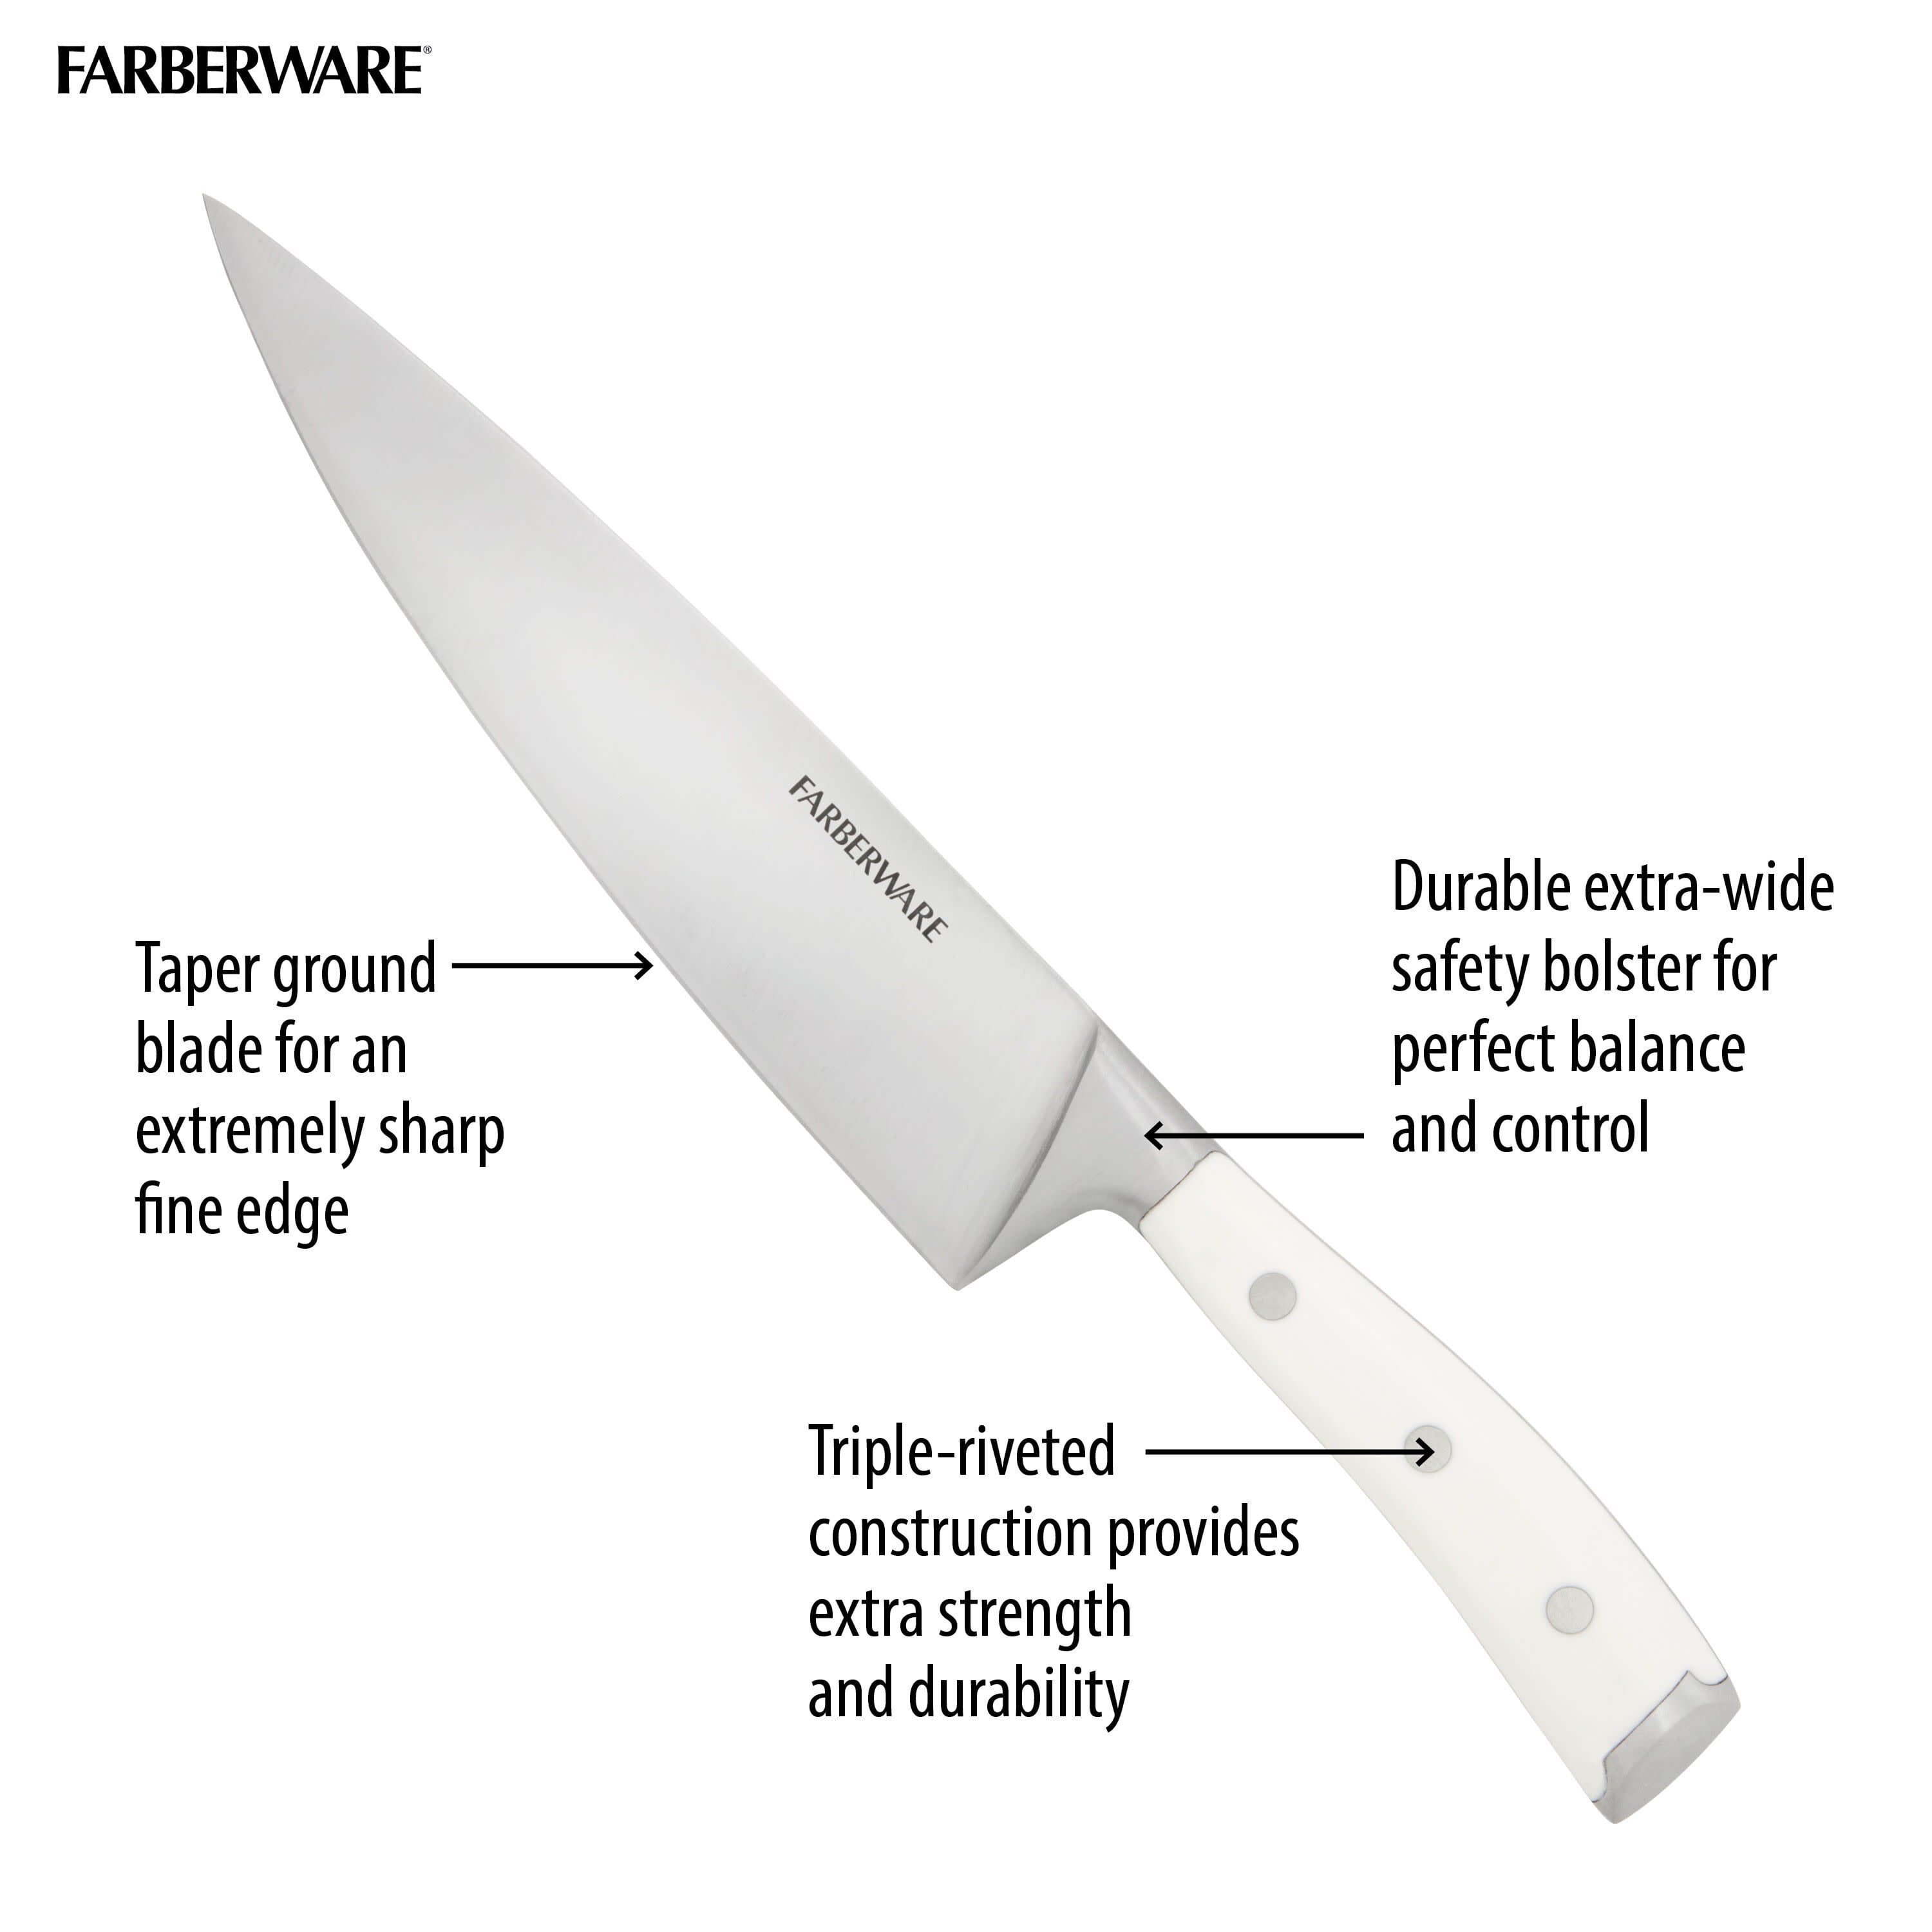 Farberware 15-Piece Triple Rivet Forged Knife Block Set - 5280849